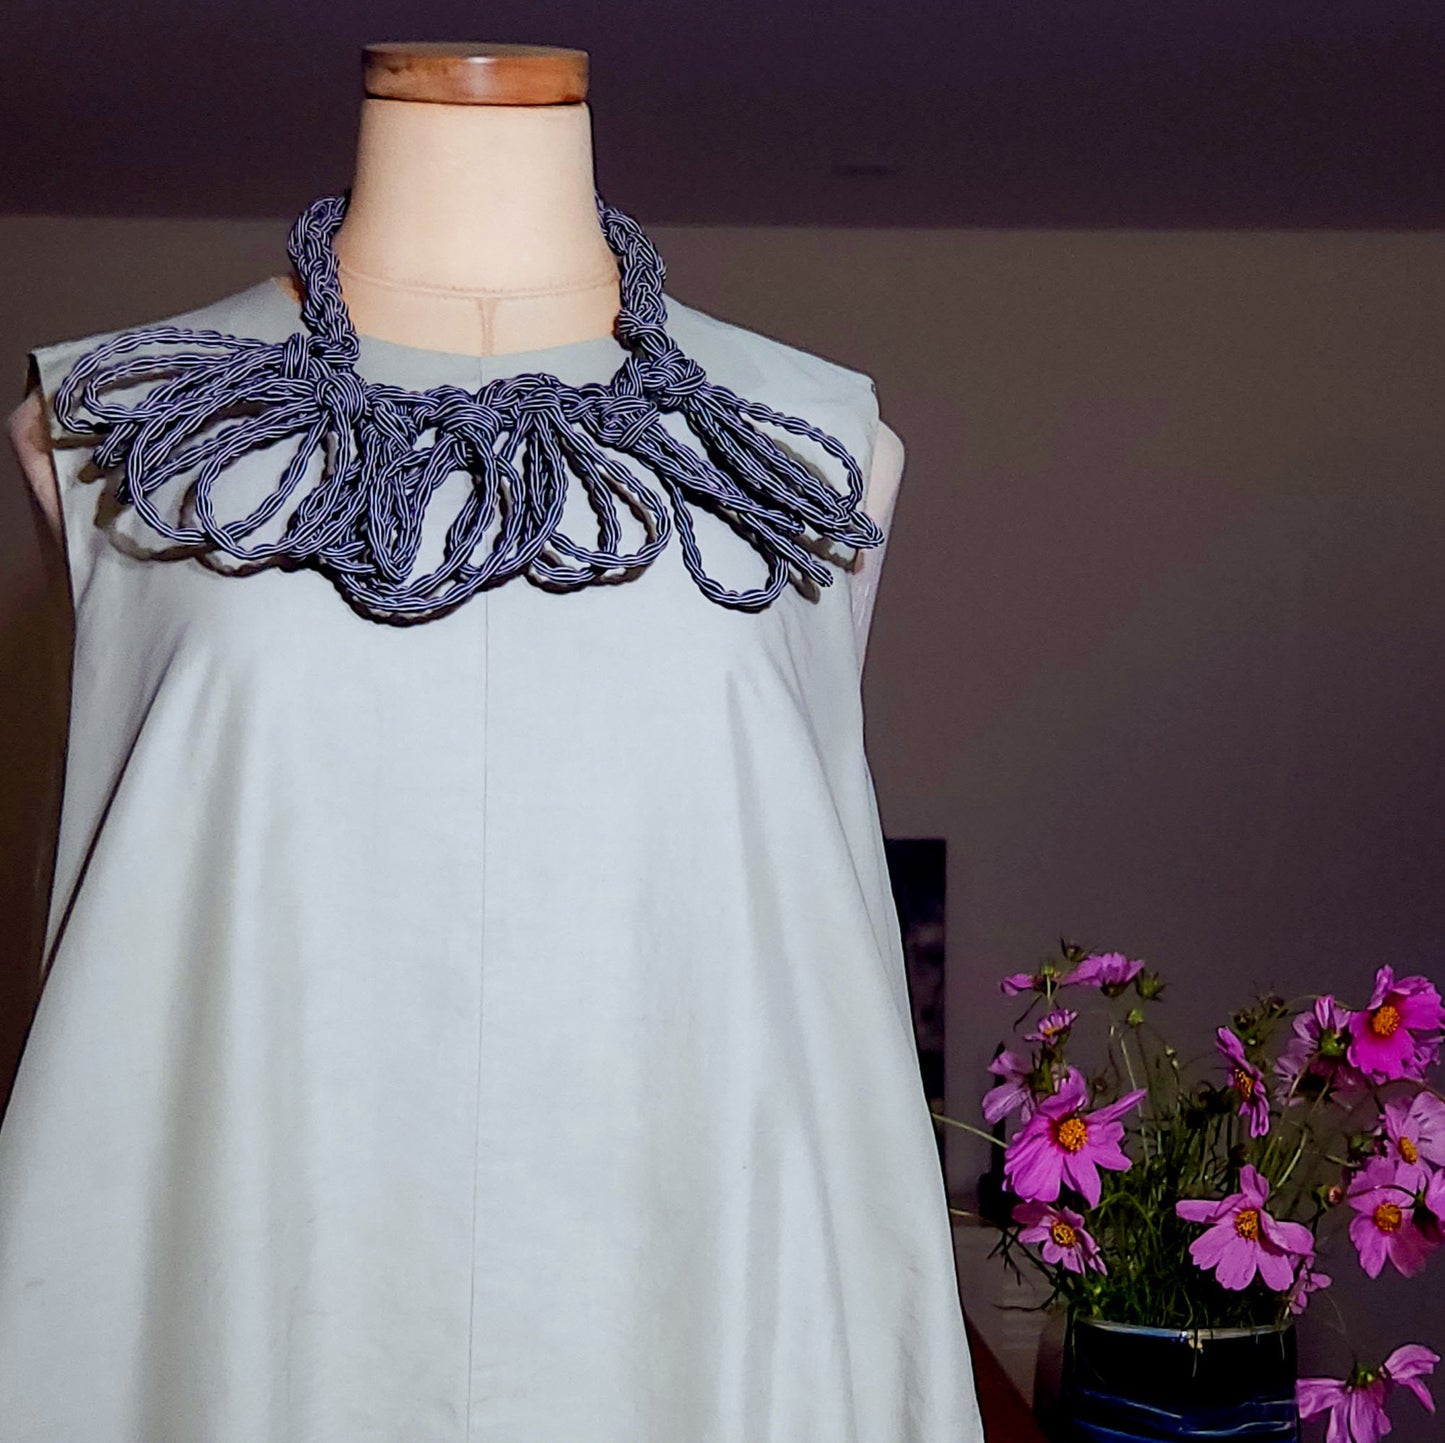 Nostalgia textile necklace in black and white